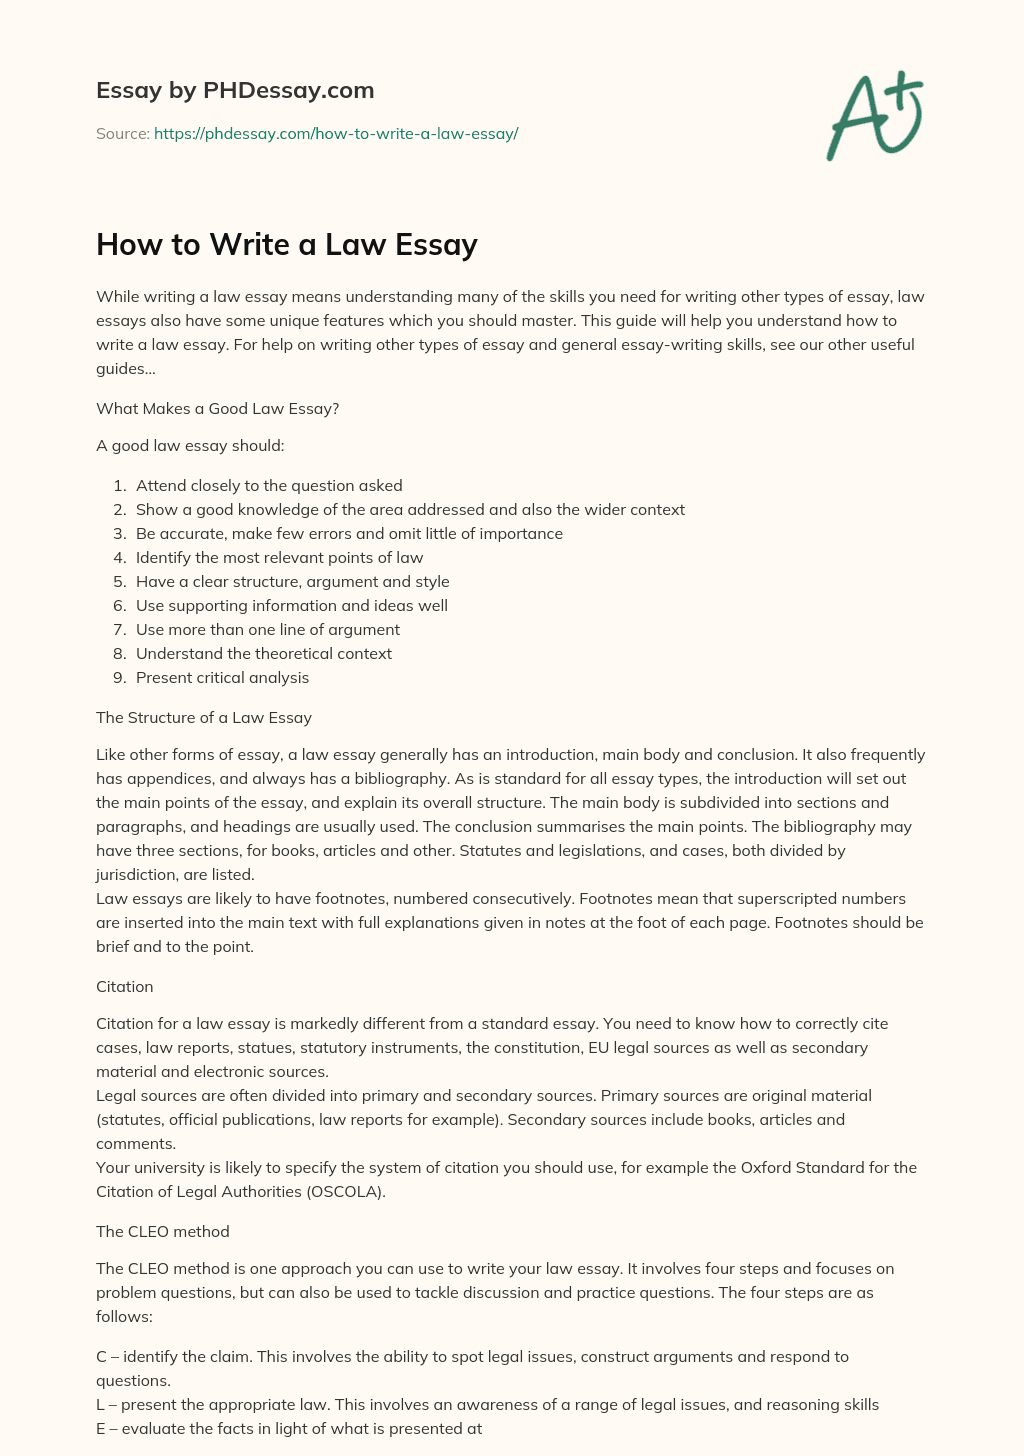 How to Write a Law Essay essay